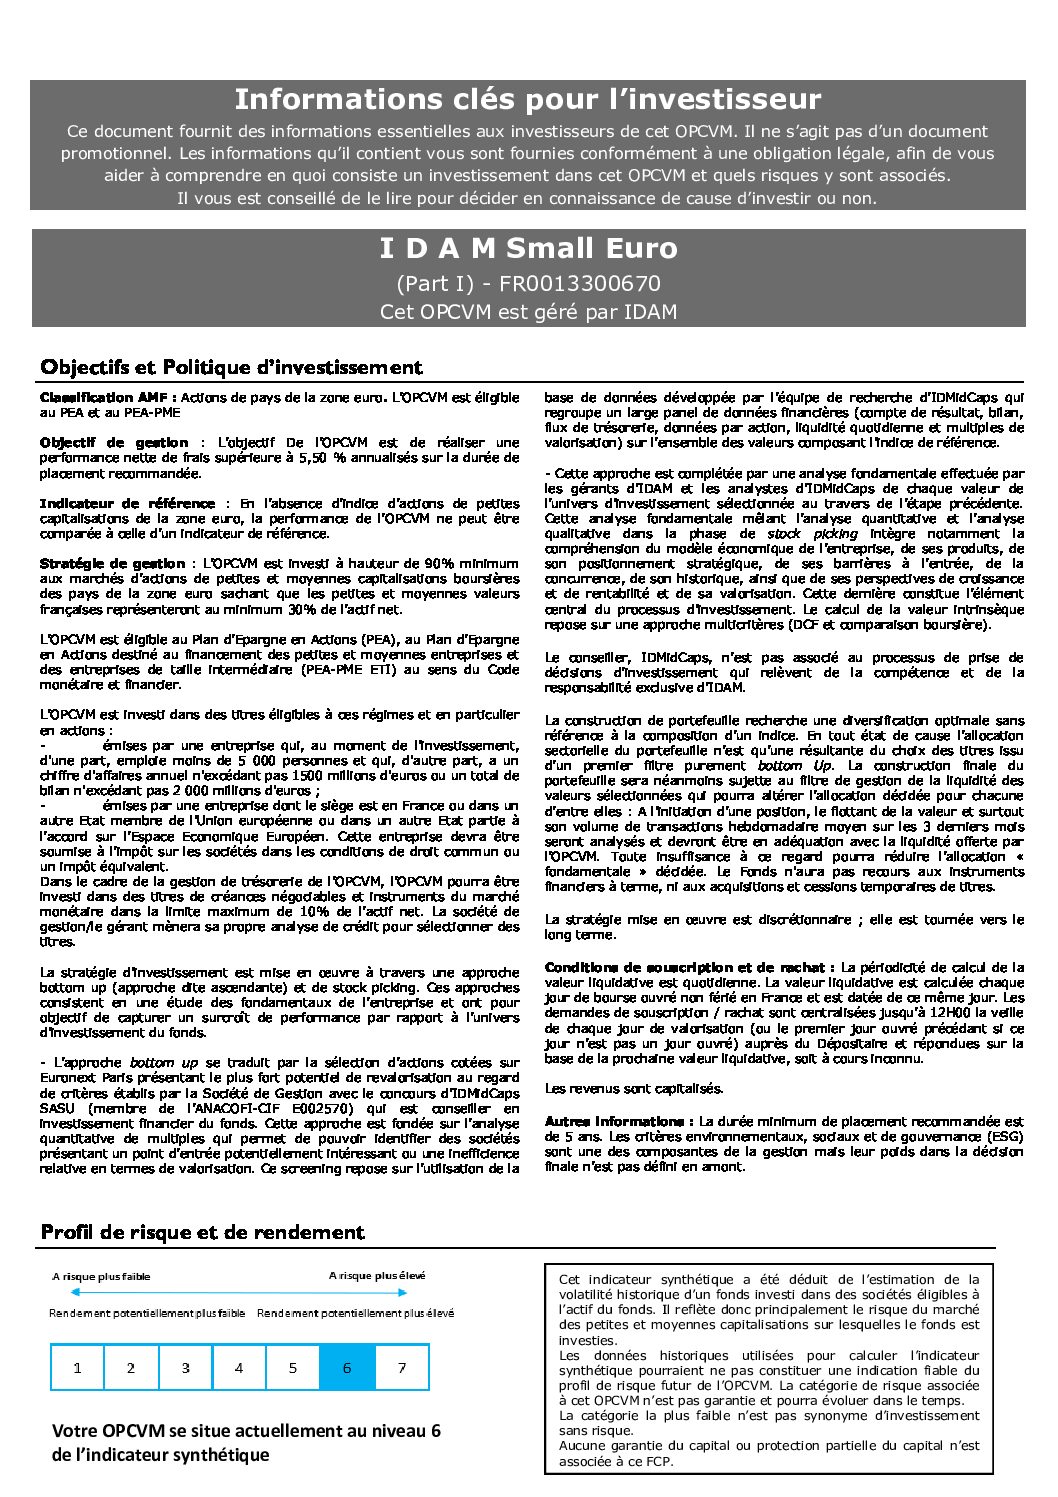 DICI-Part-I-IDAM-SMALL-EURO-4-pdf